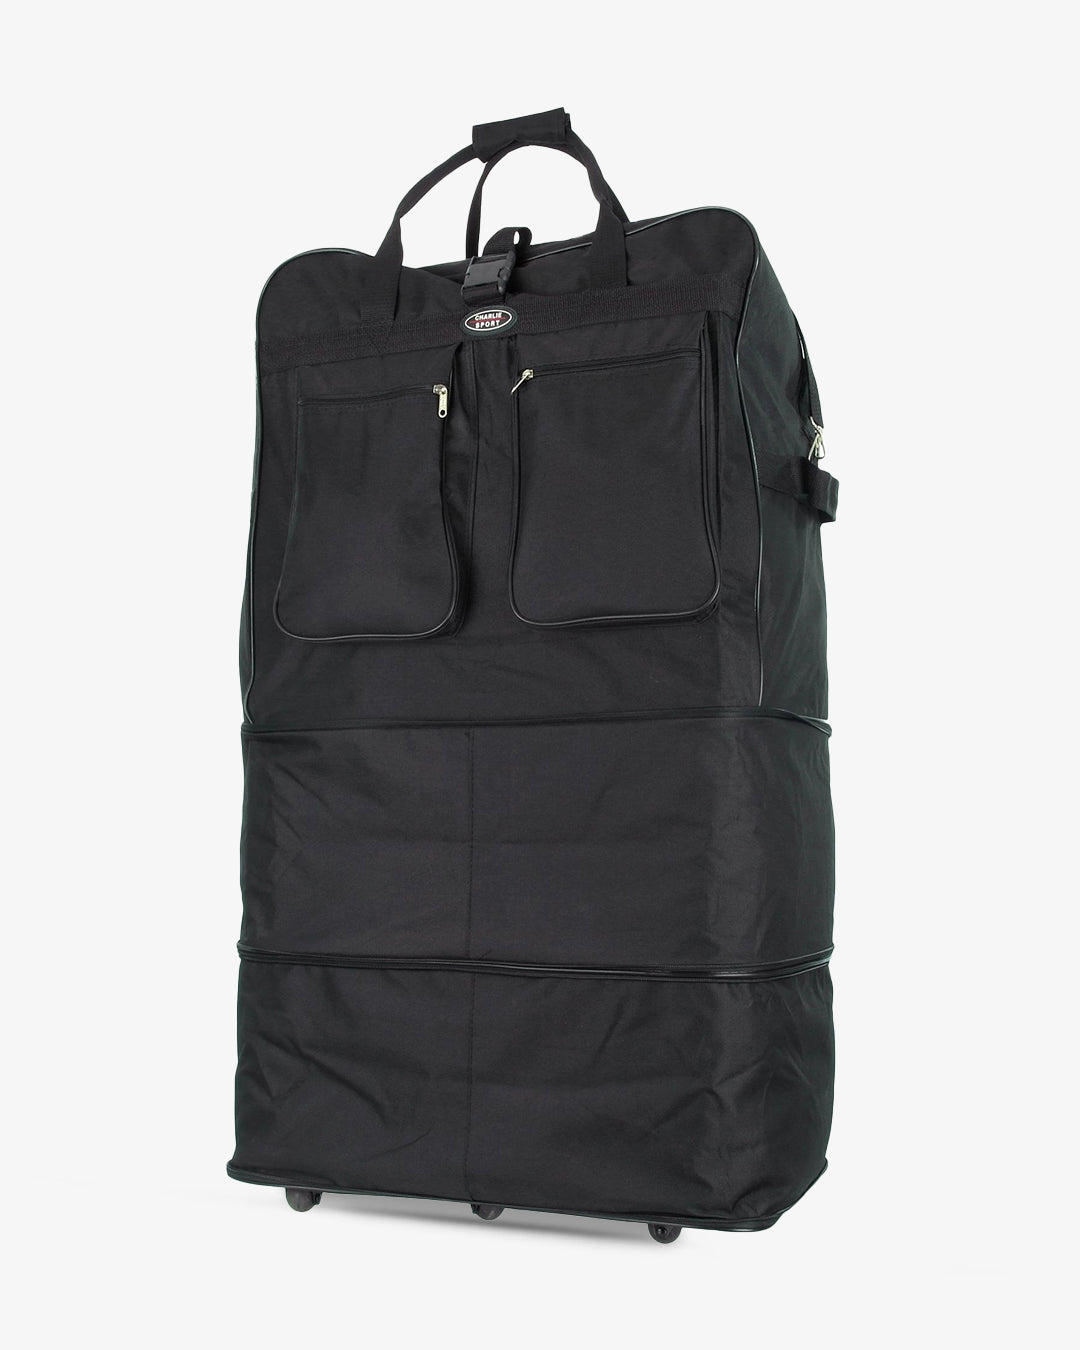 #11- Expandable Wheeled Bag (70lbs) (36")